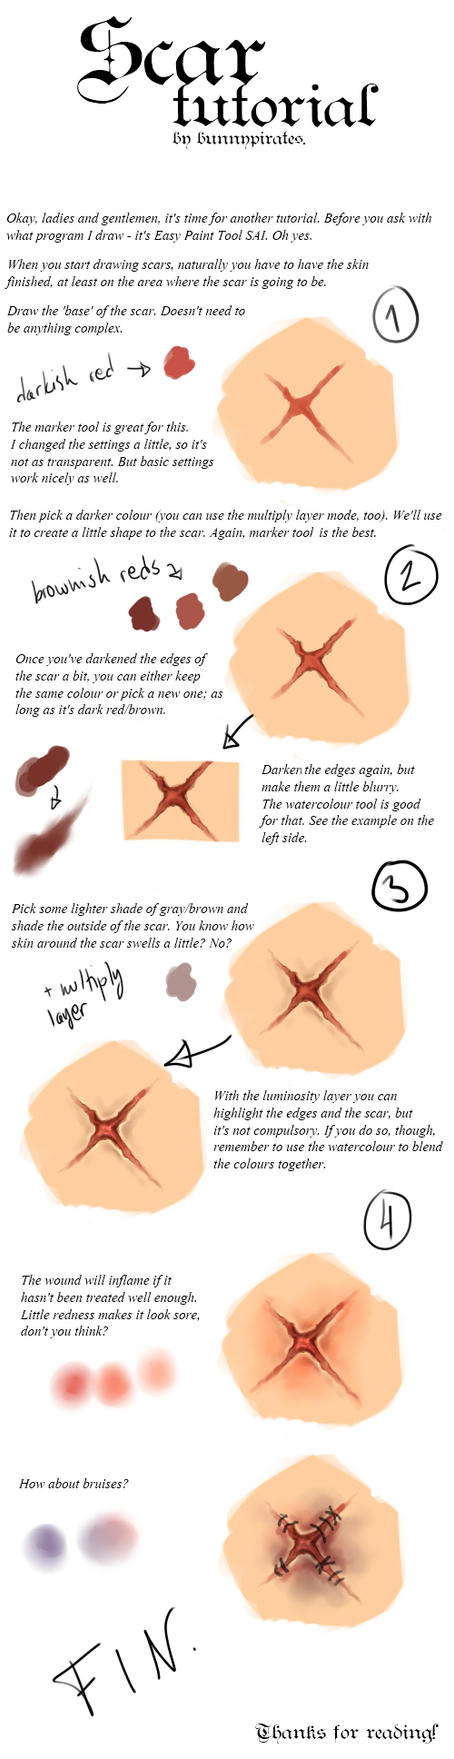 Scar tutorial by bunnypirates on DeviantArt